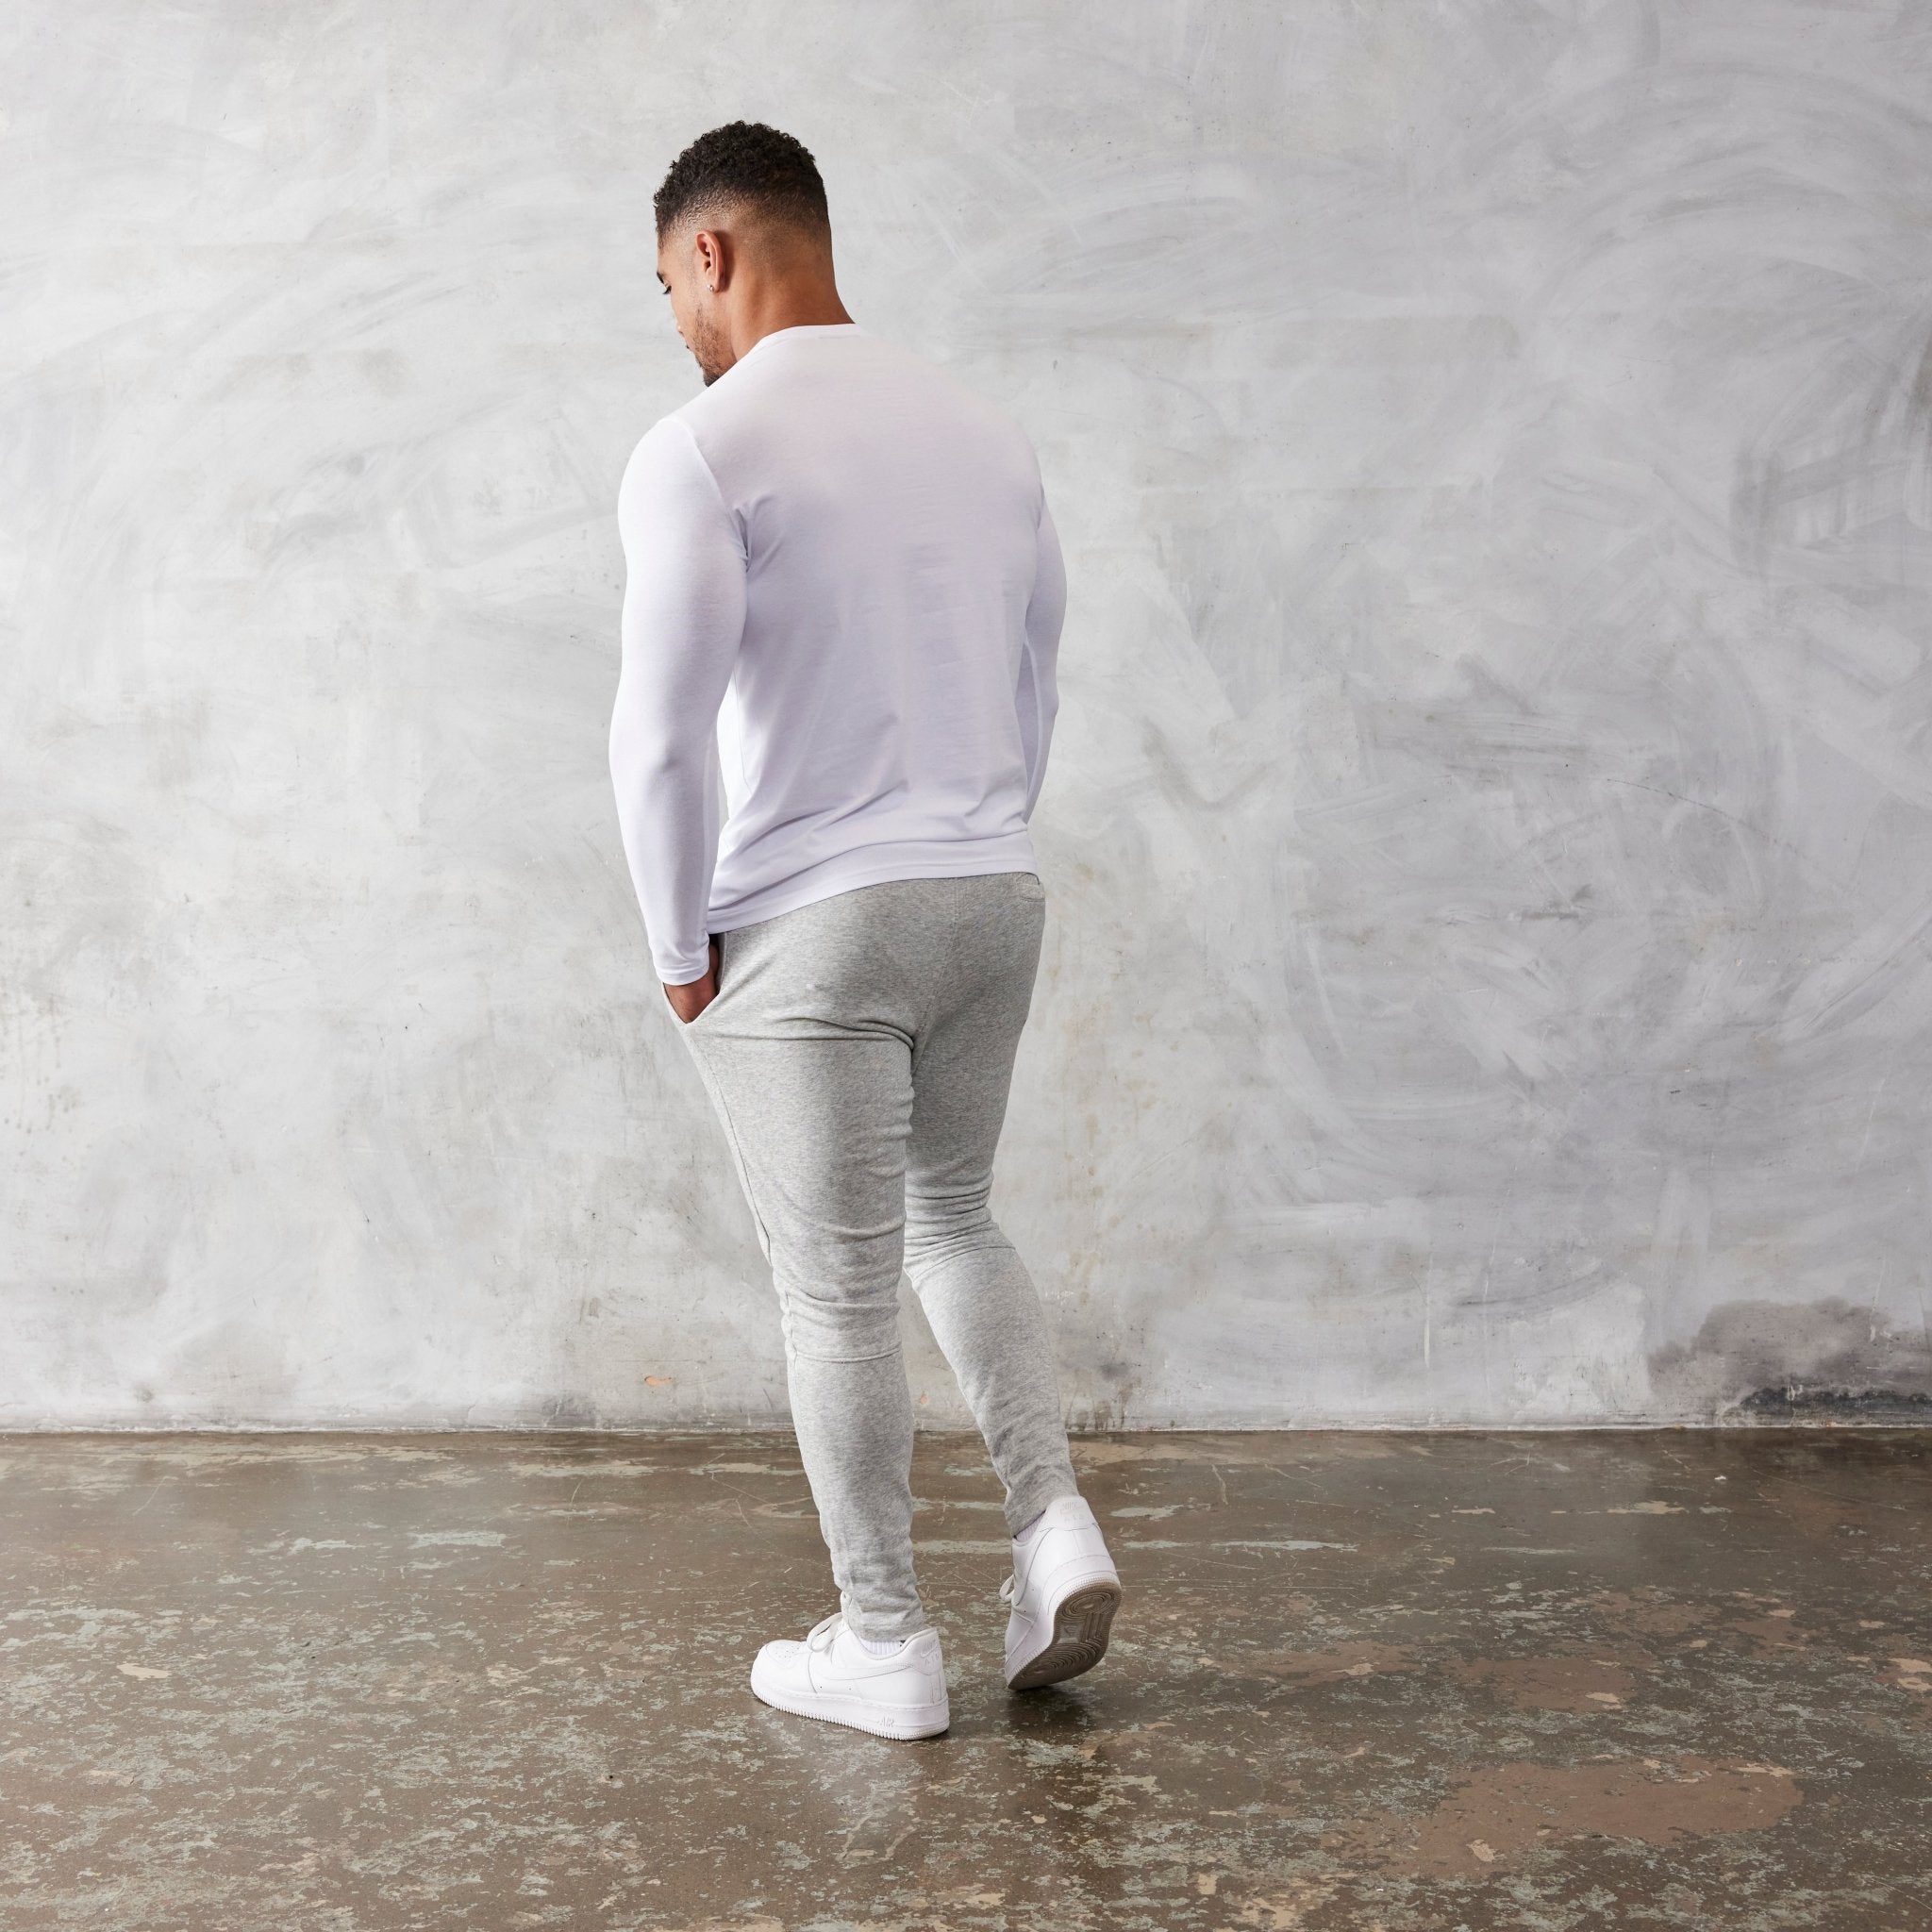 Vanquish Essential White Slim Fit Long Sleeve T Shirt - Vanquish Fitness